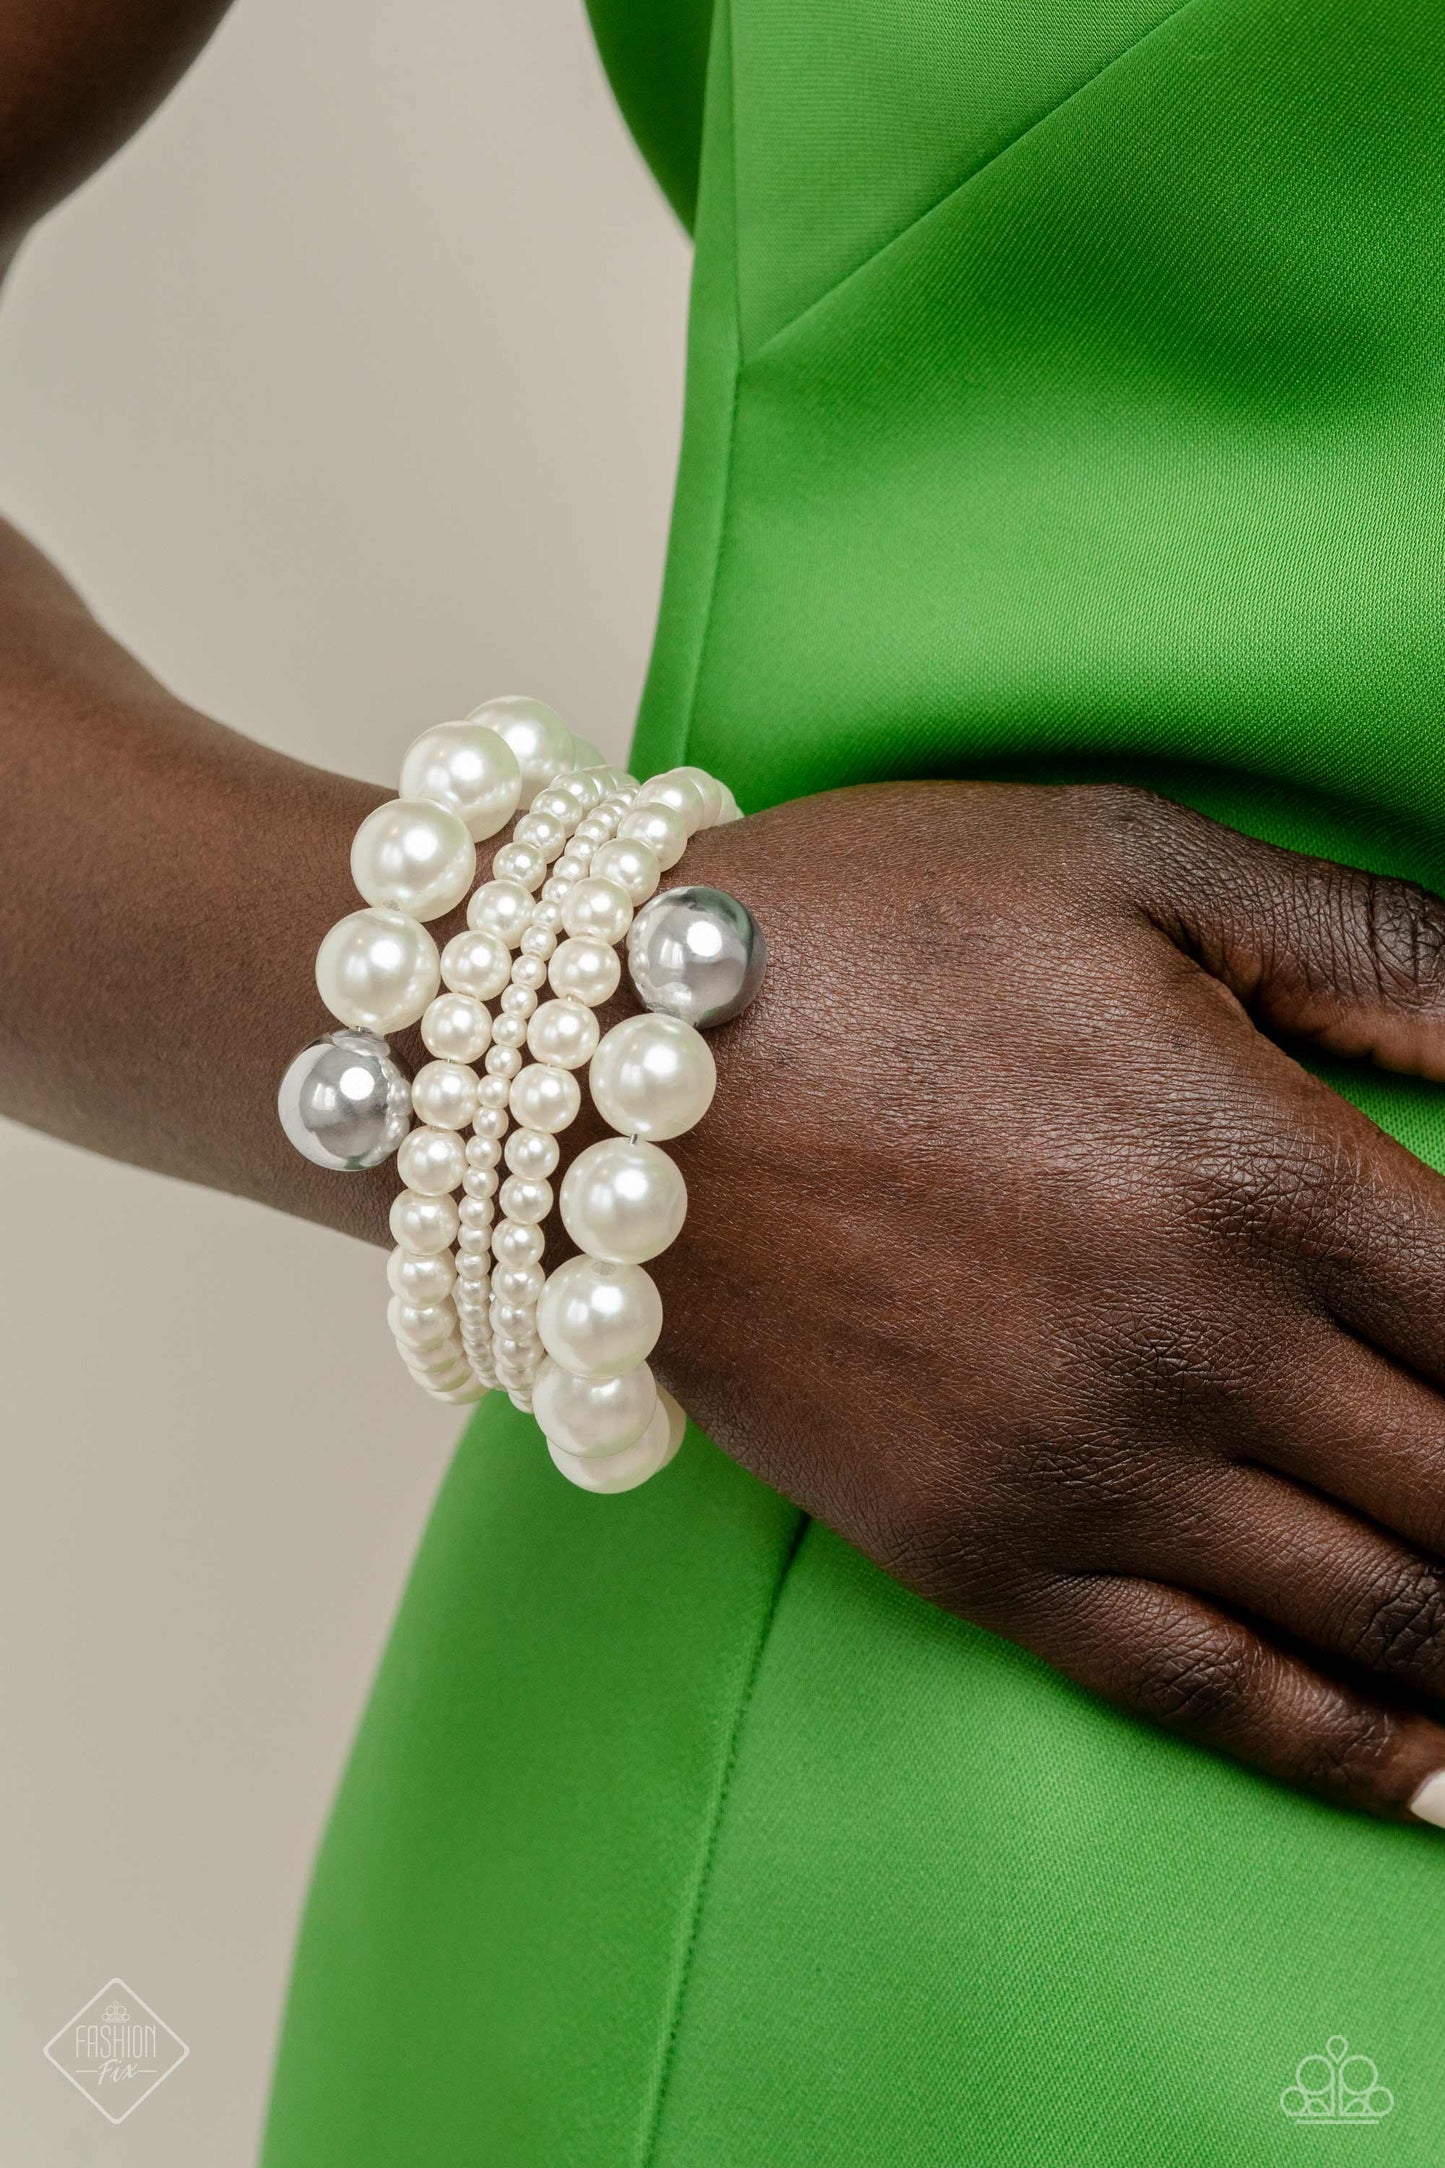 Pleasing Pirouette - White Multiple Size Pearls Paparazzi Coil Bracelet